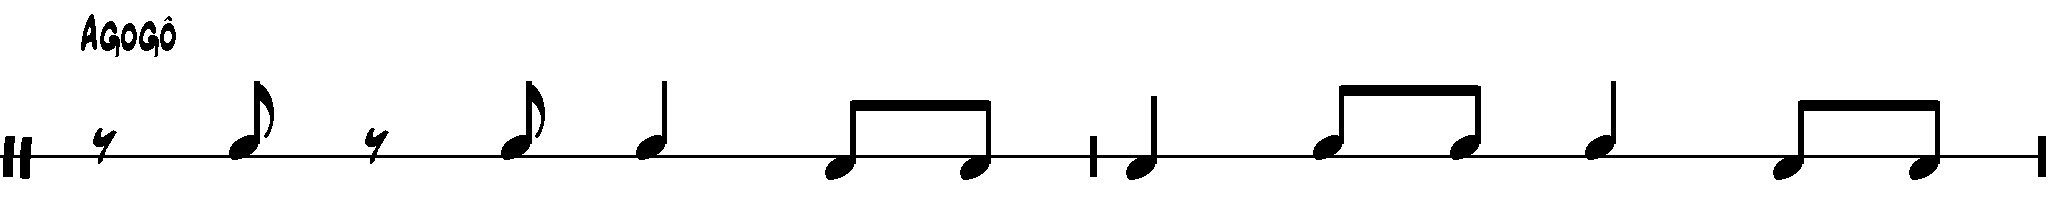 samba notation - agogo